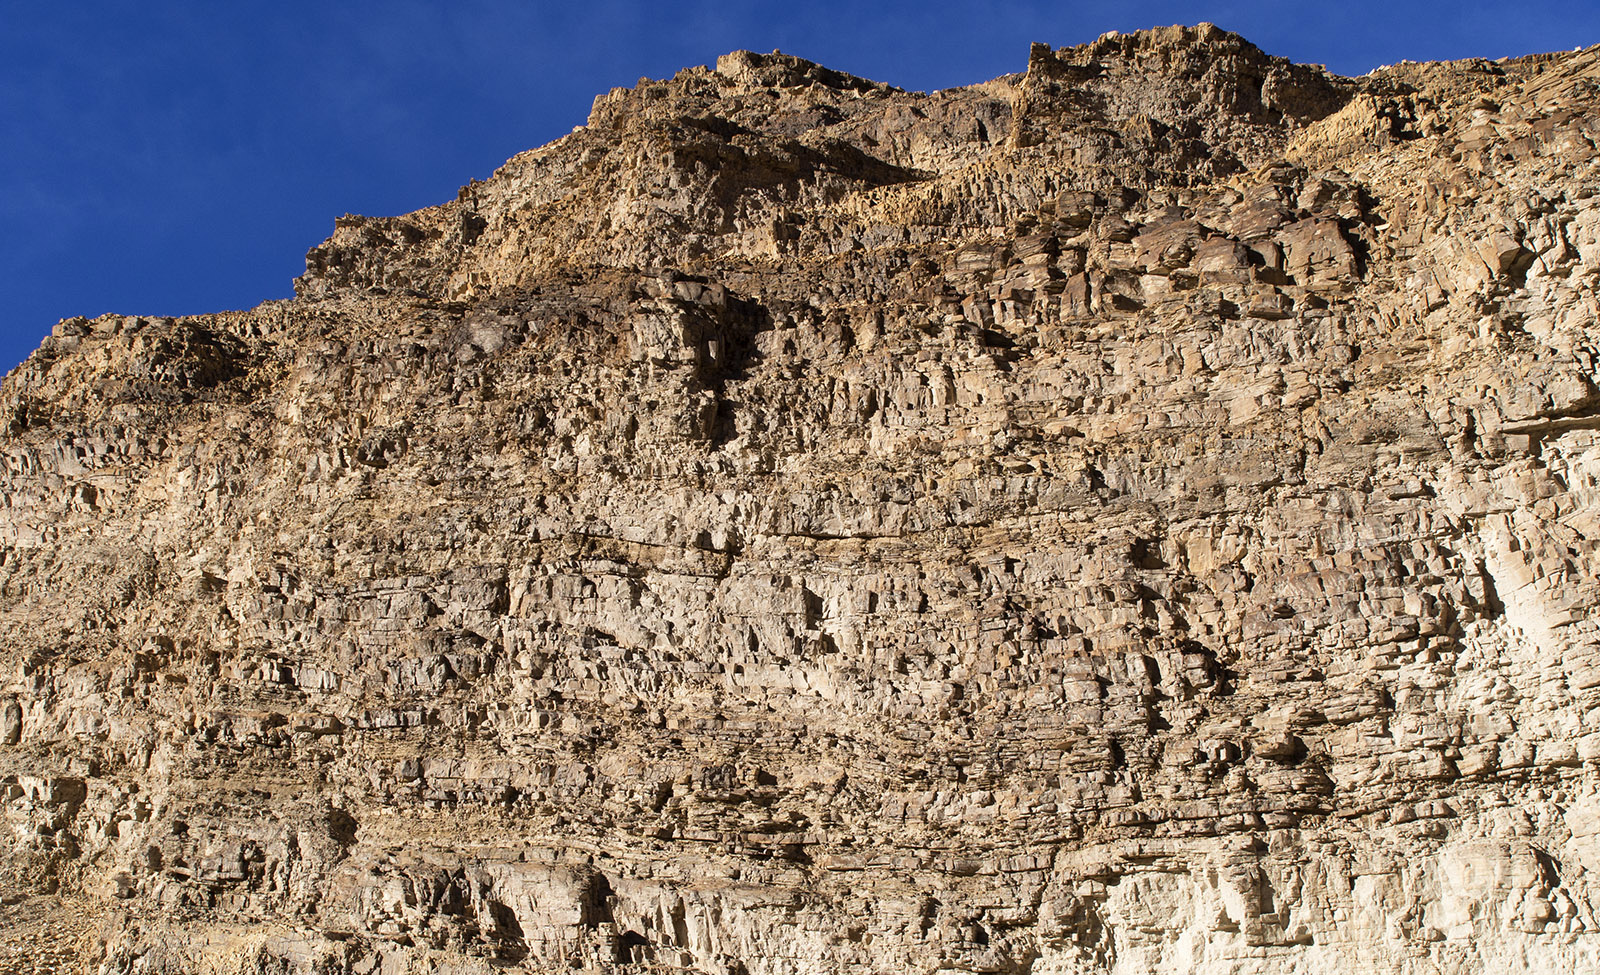 Mosaic Canyon – West wall of dolomite and limestone strata